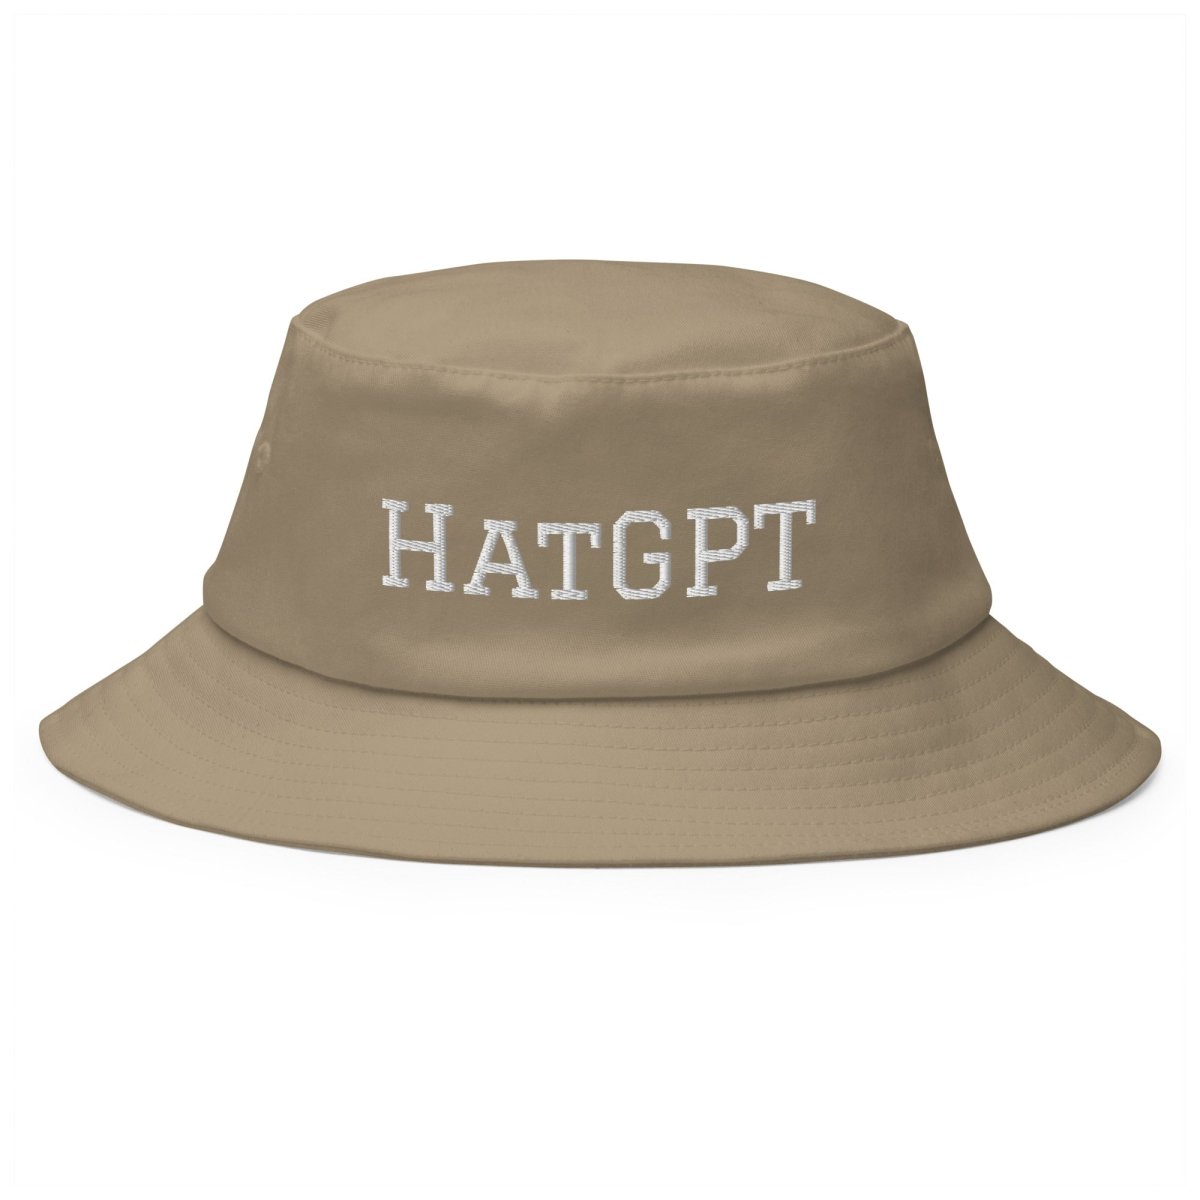 HatGPT Embroidered Bucket Hat - Khaki - AI Store